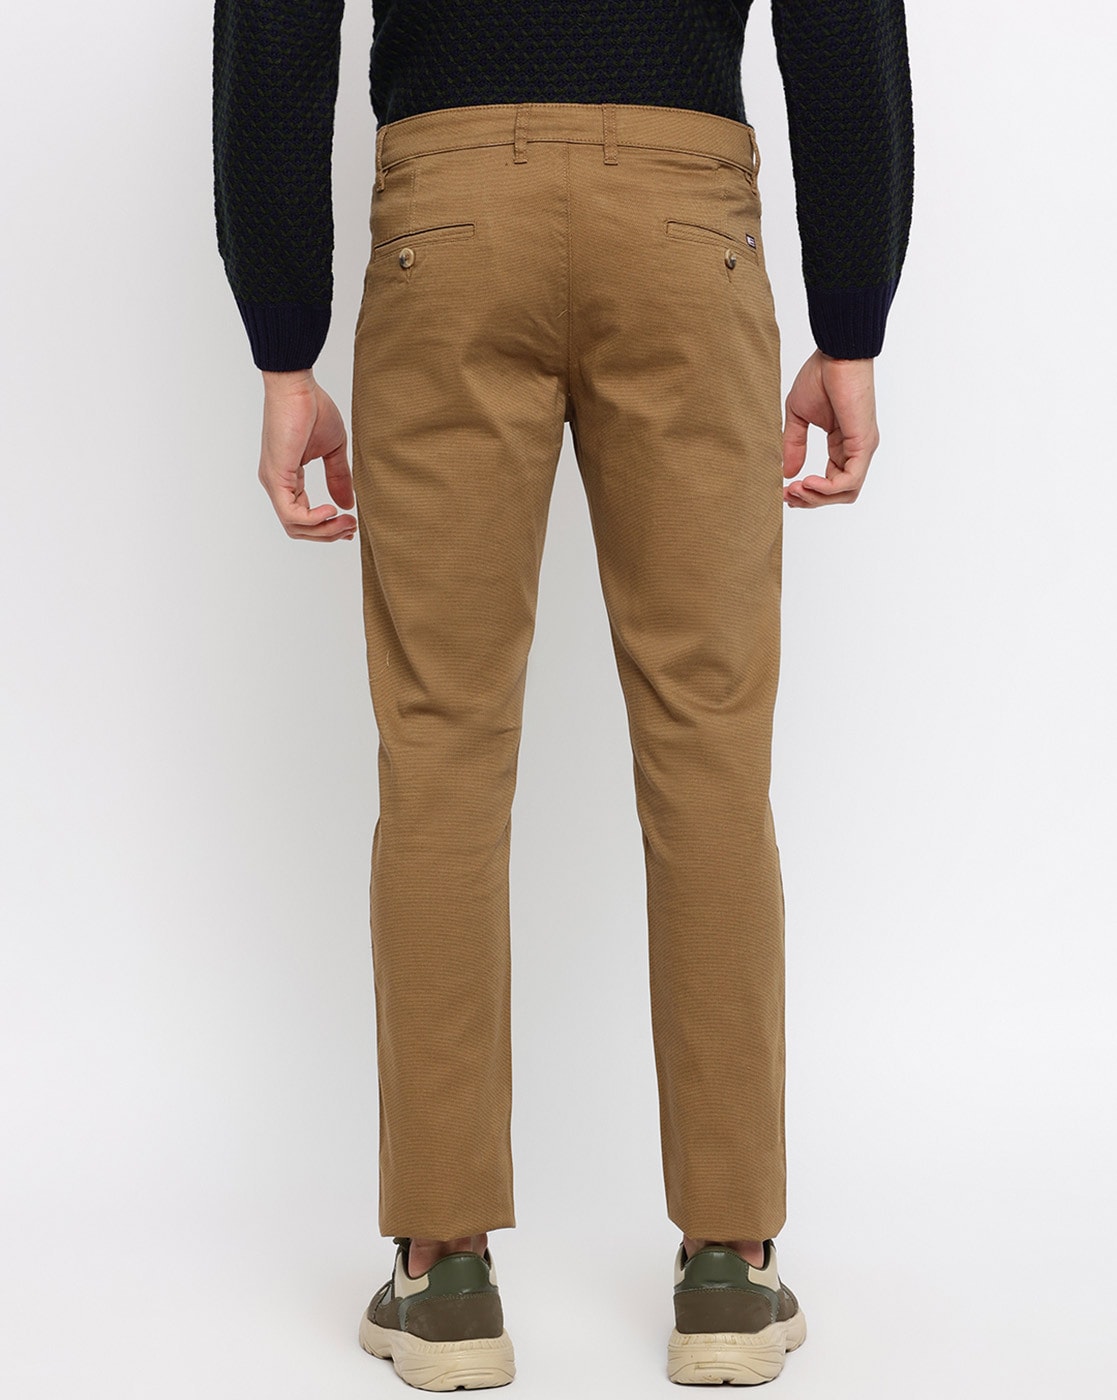 Buy OAMC men khaki cotton trousers for $465 online on SV77,  24E28OAU75/COT00981/206